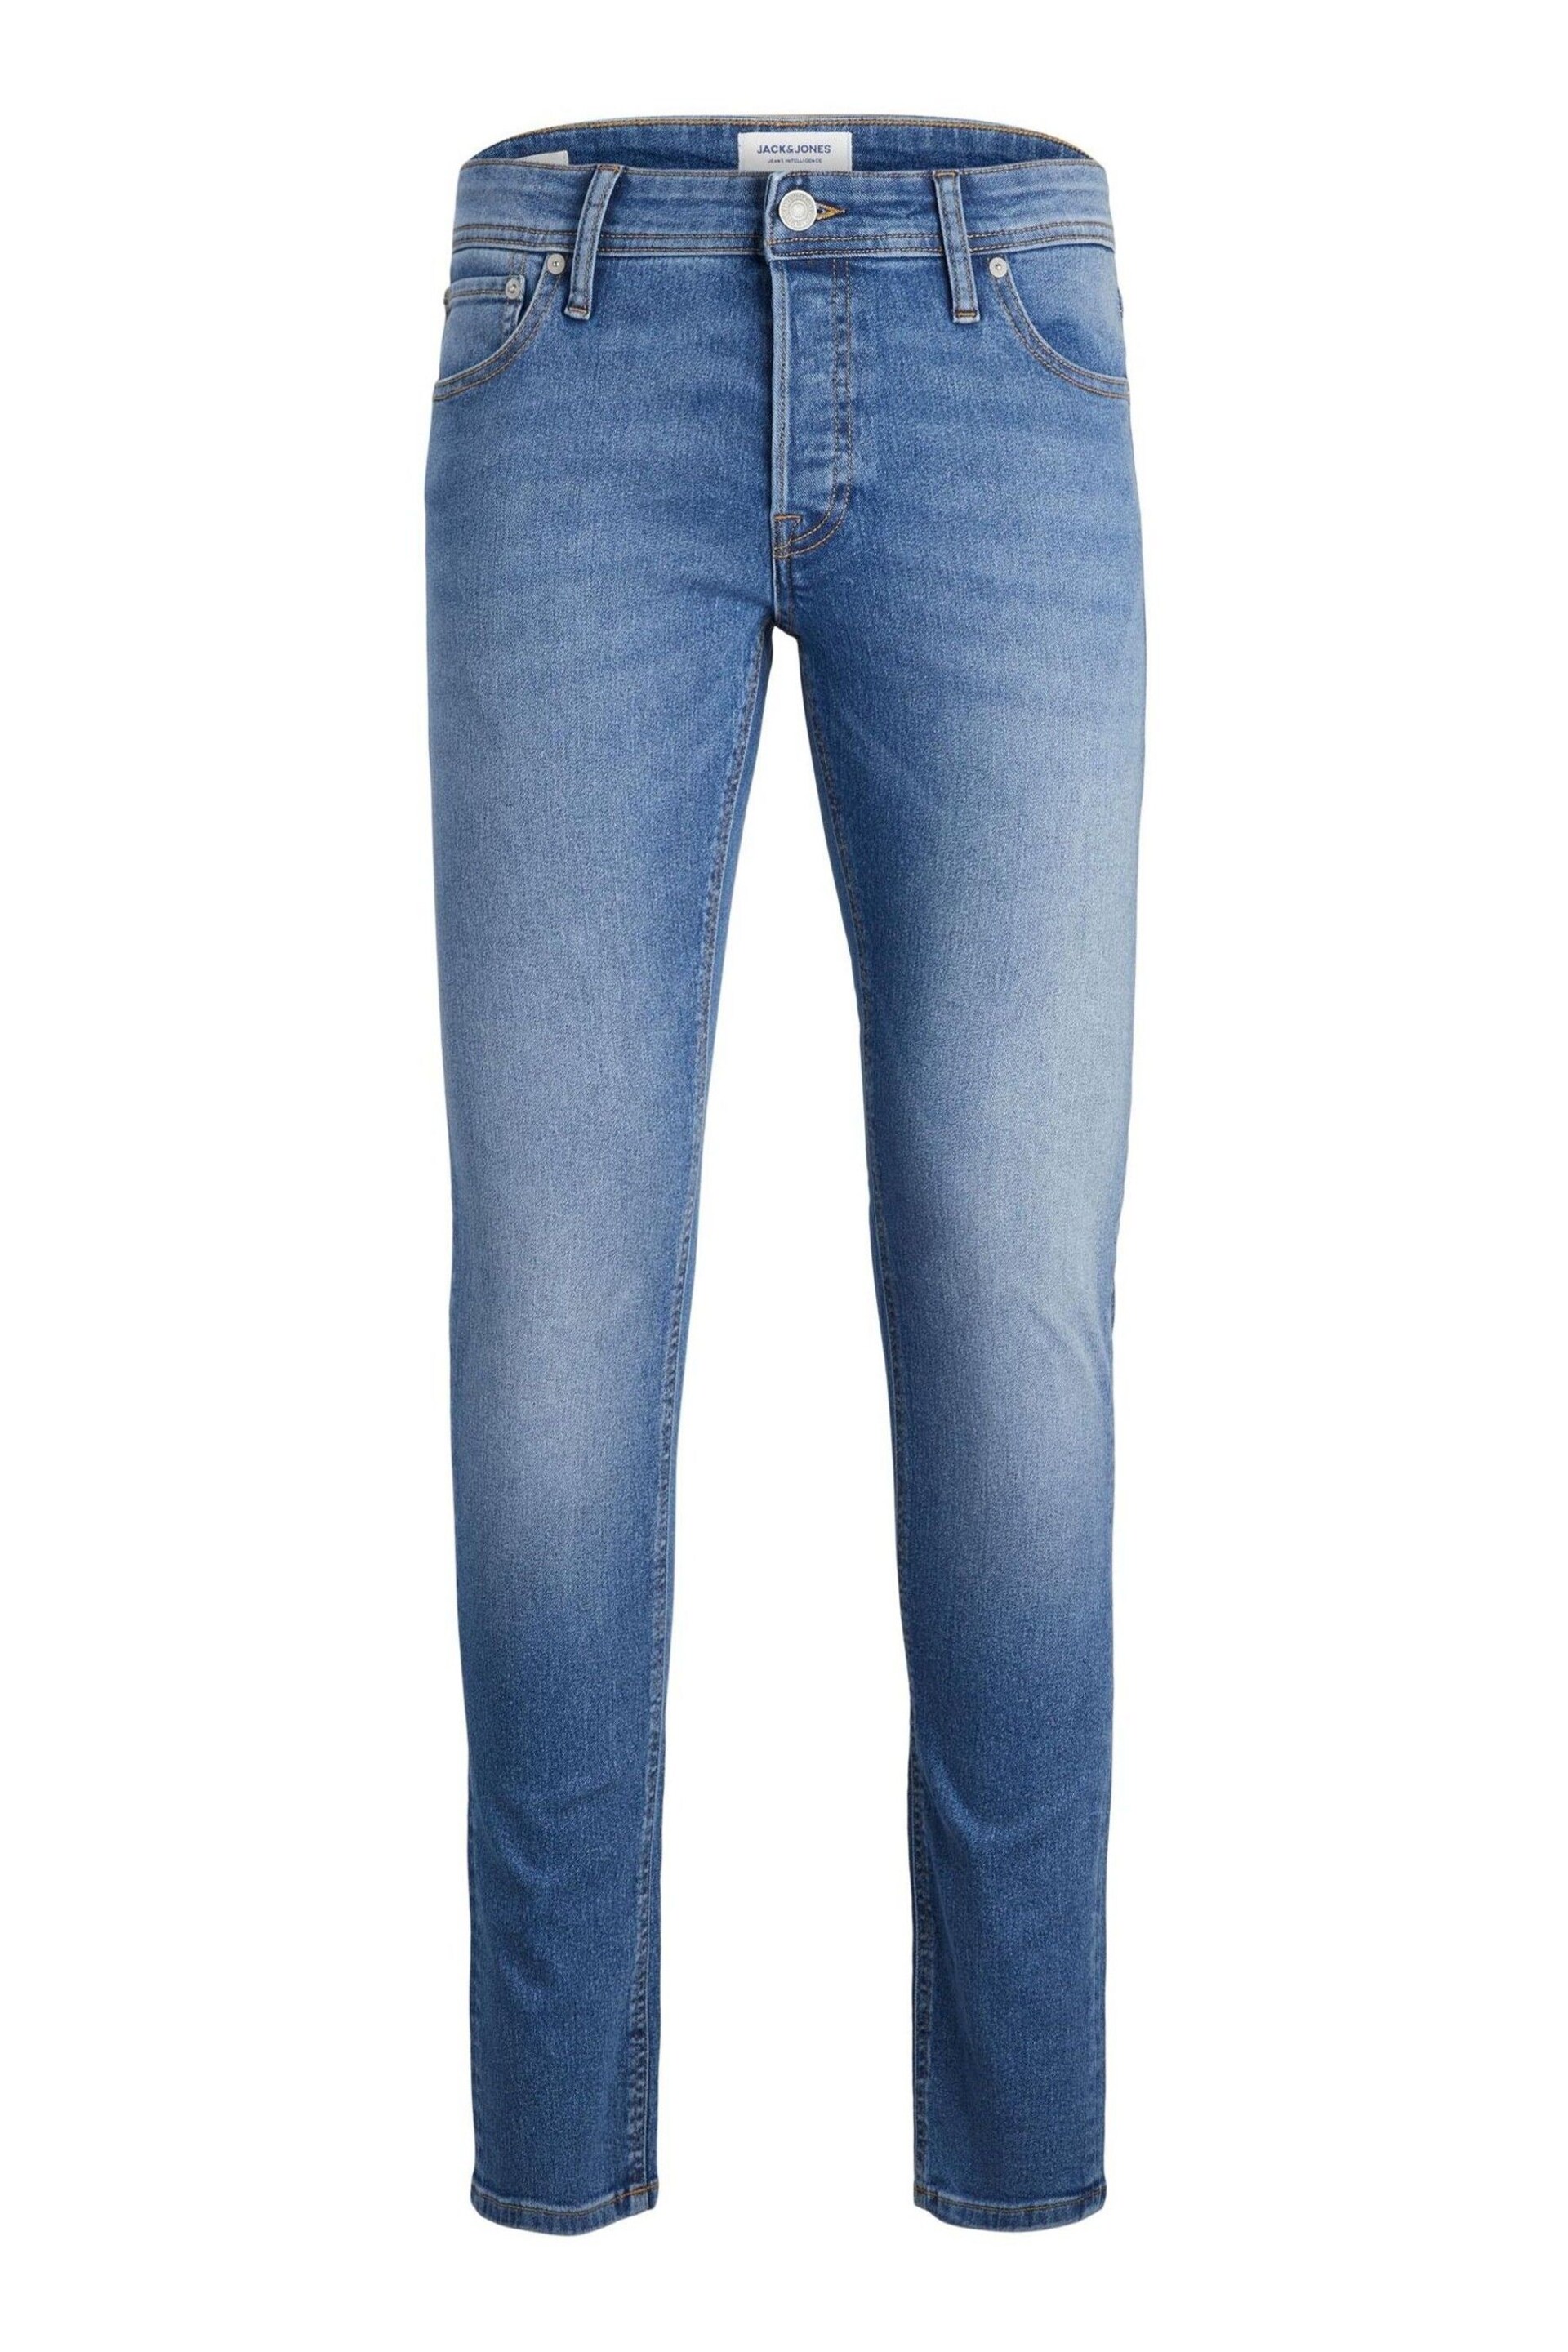 JACK & JONES Blue Slim Fit Jeans - Image 5 of 8